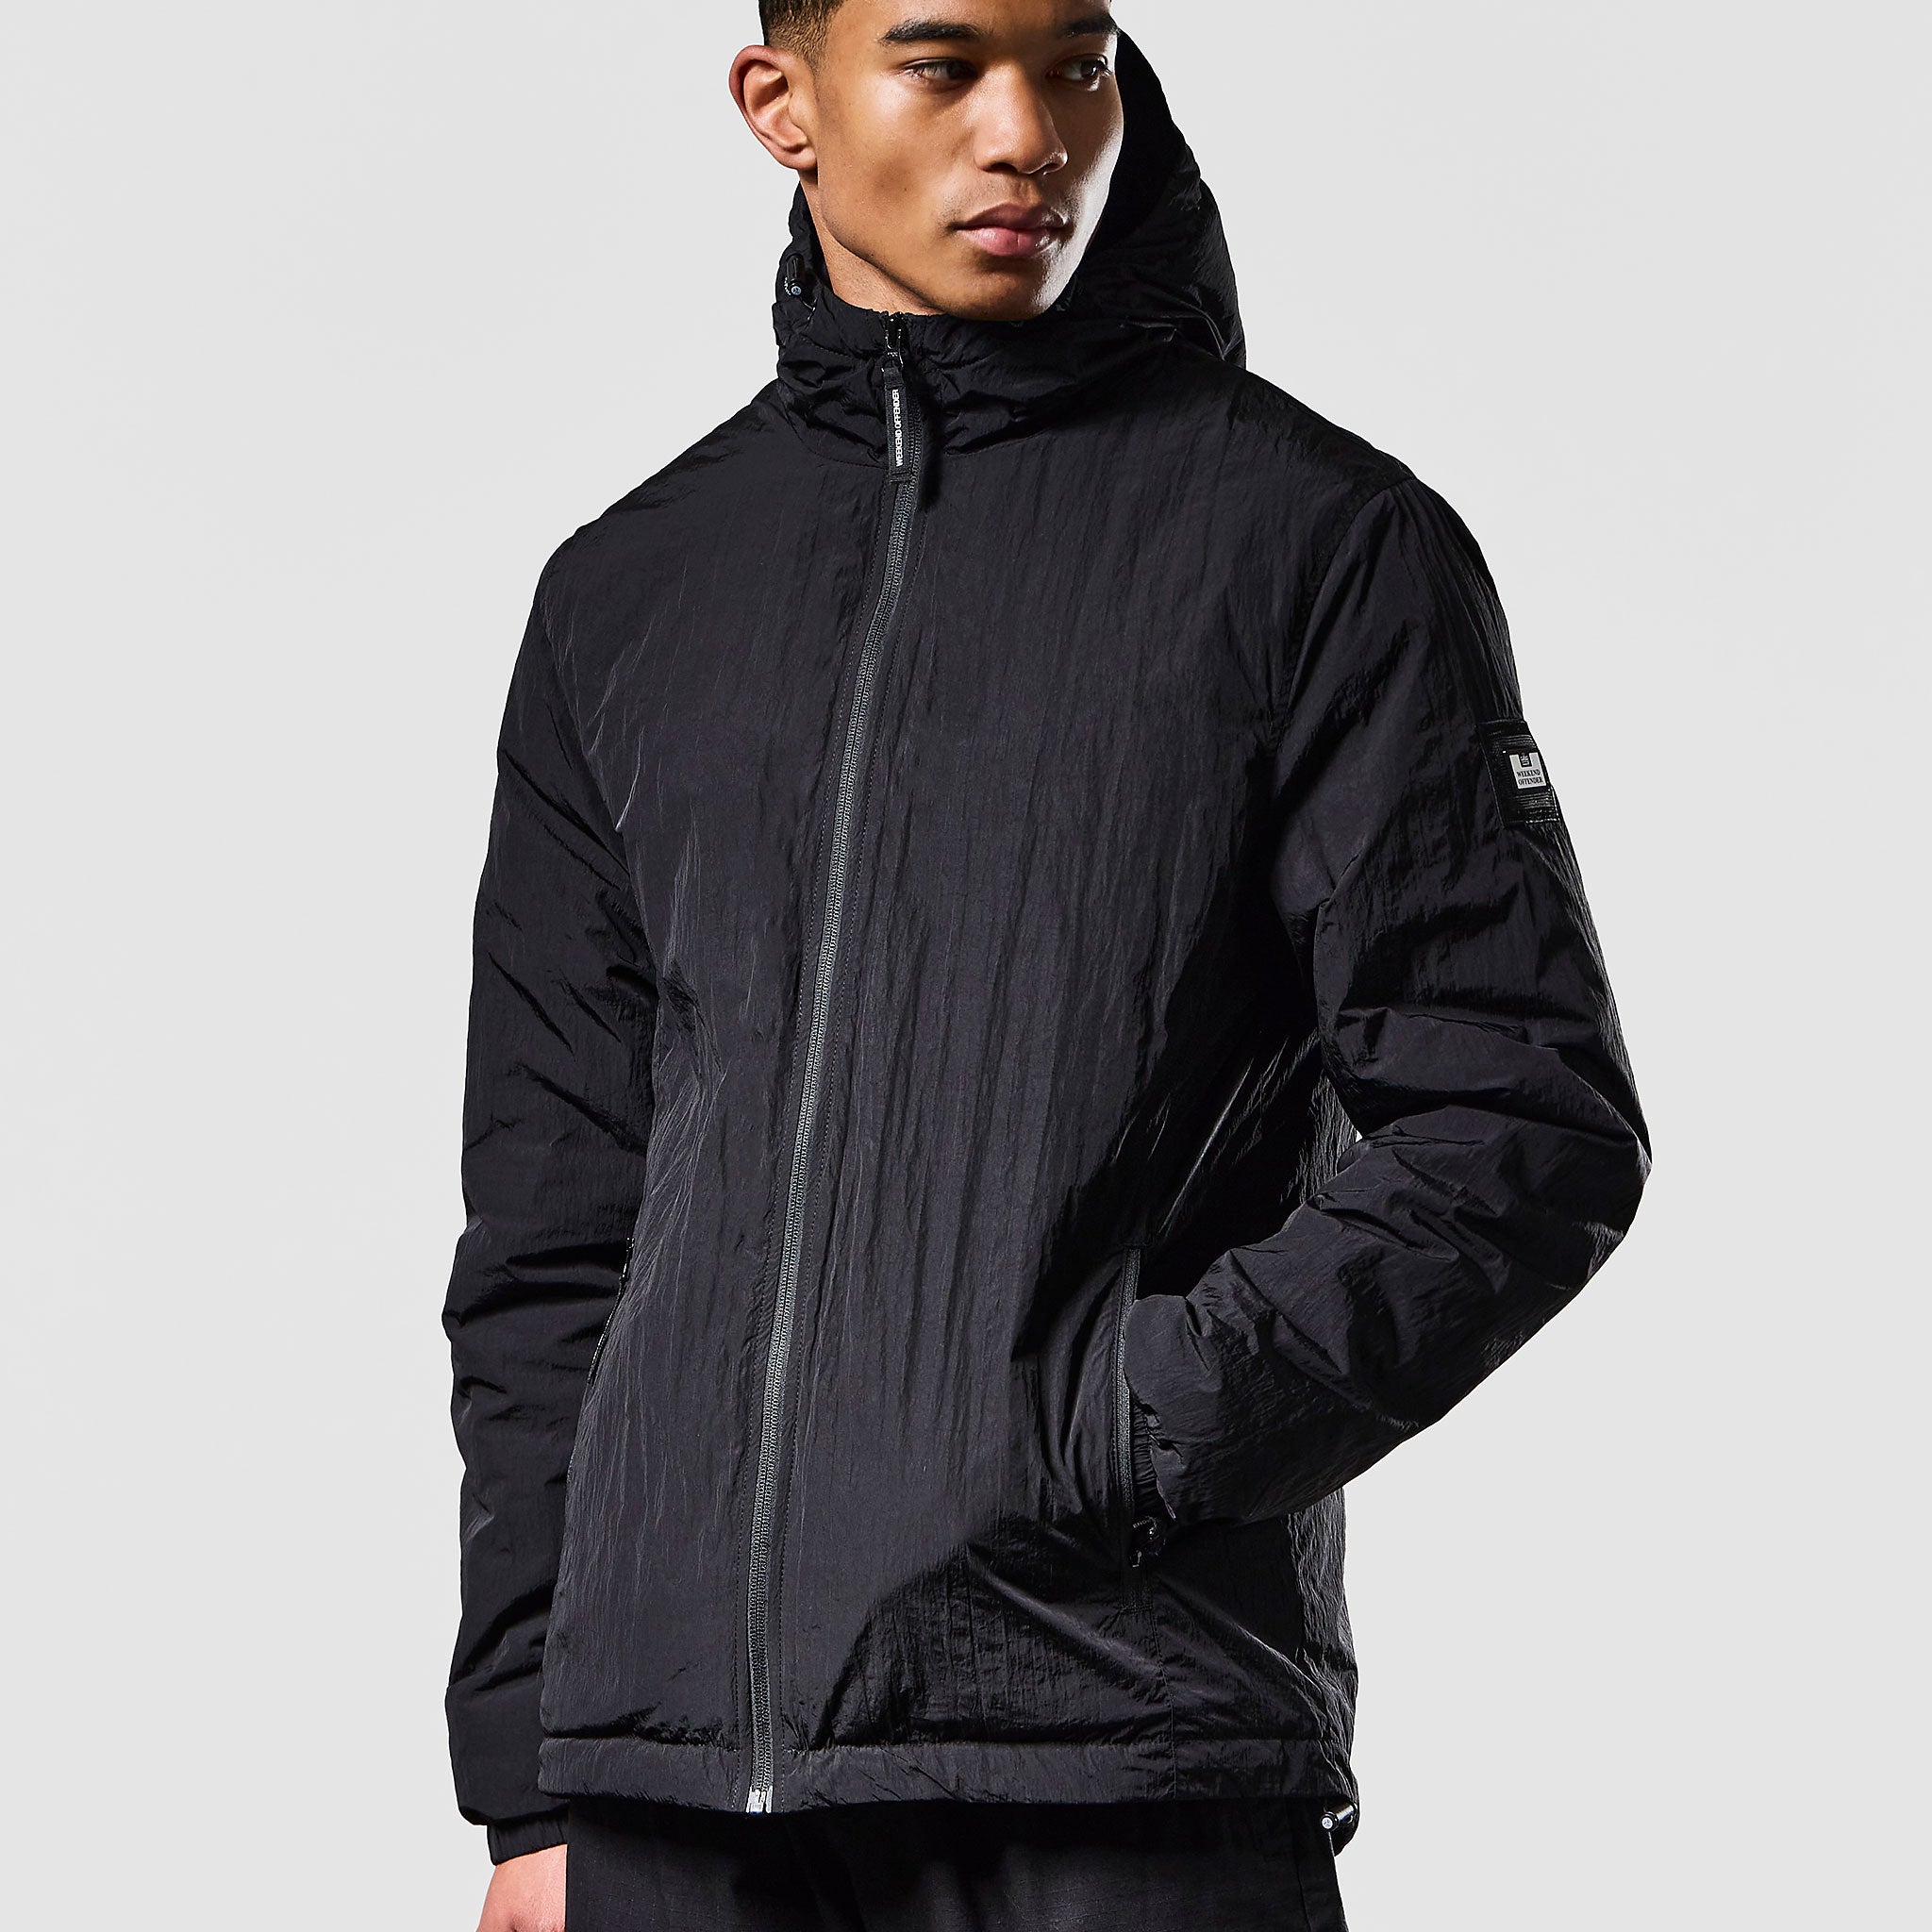 Heavy Jackets | Winter Jackets, Parkas & More | Urban Menswear